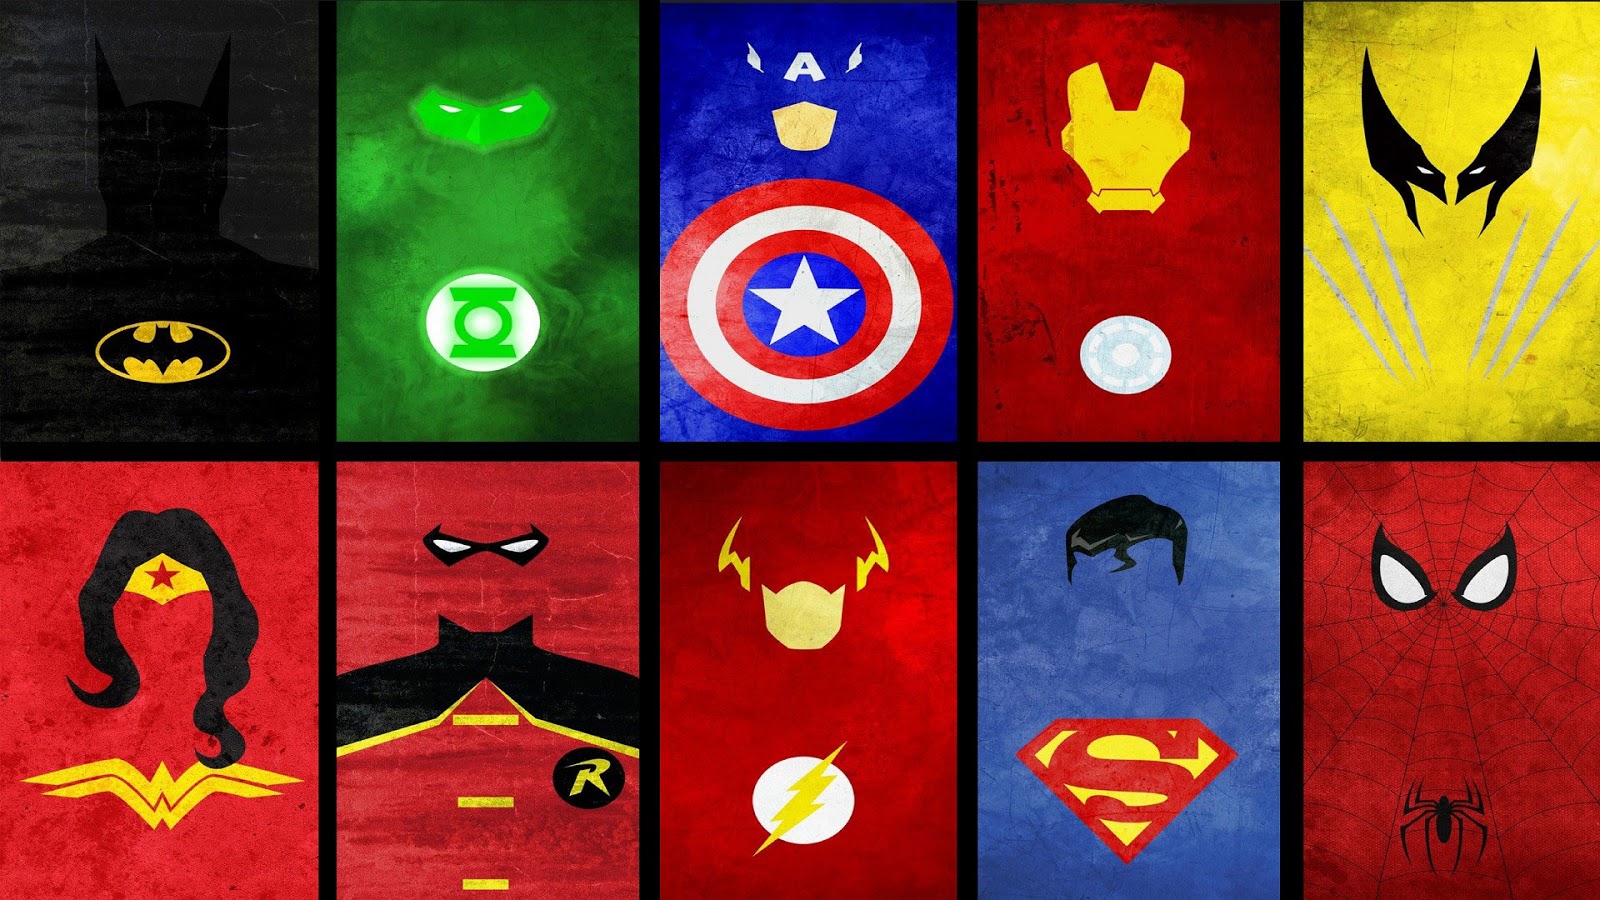 Hero Logo Wallpapers